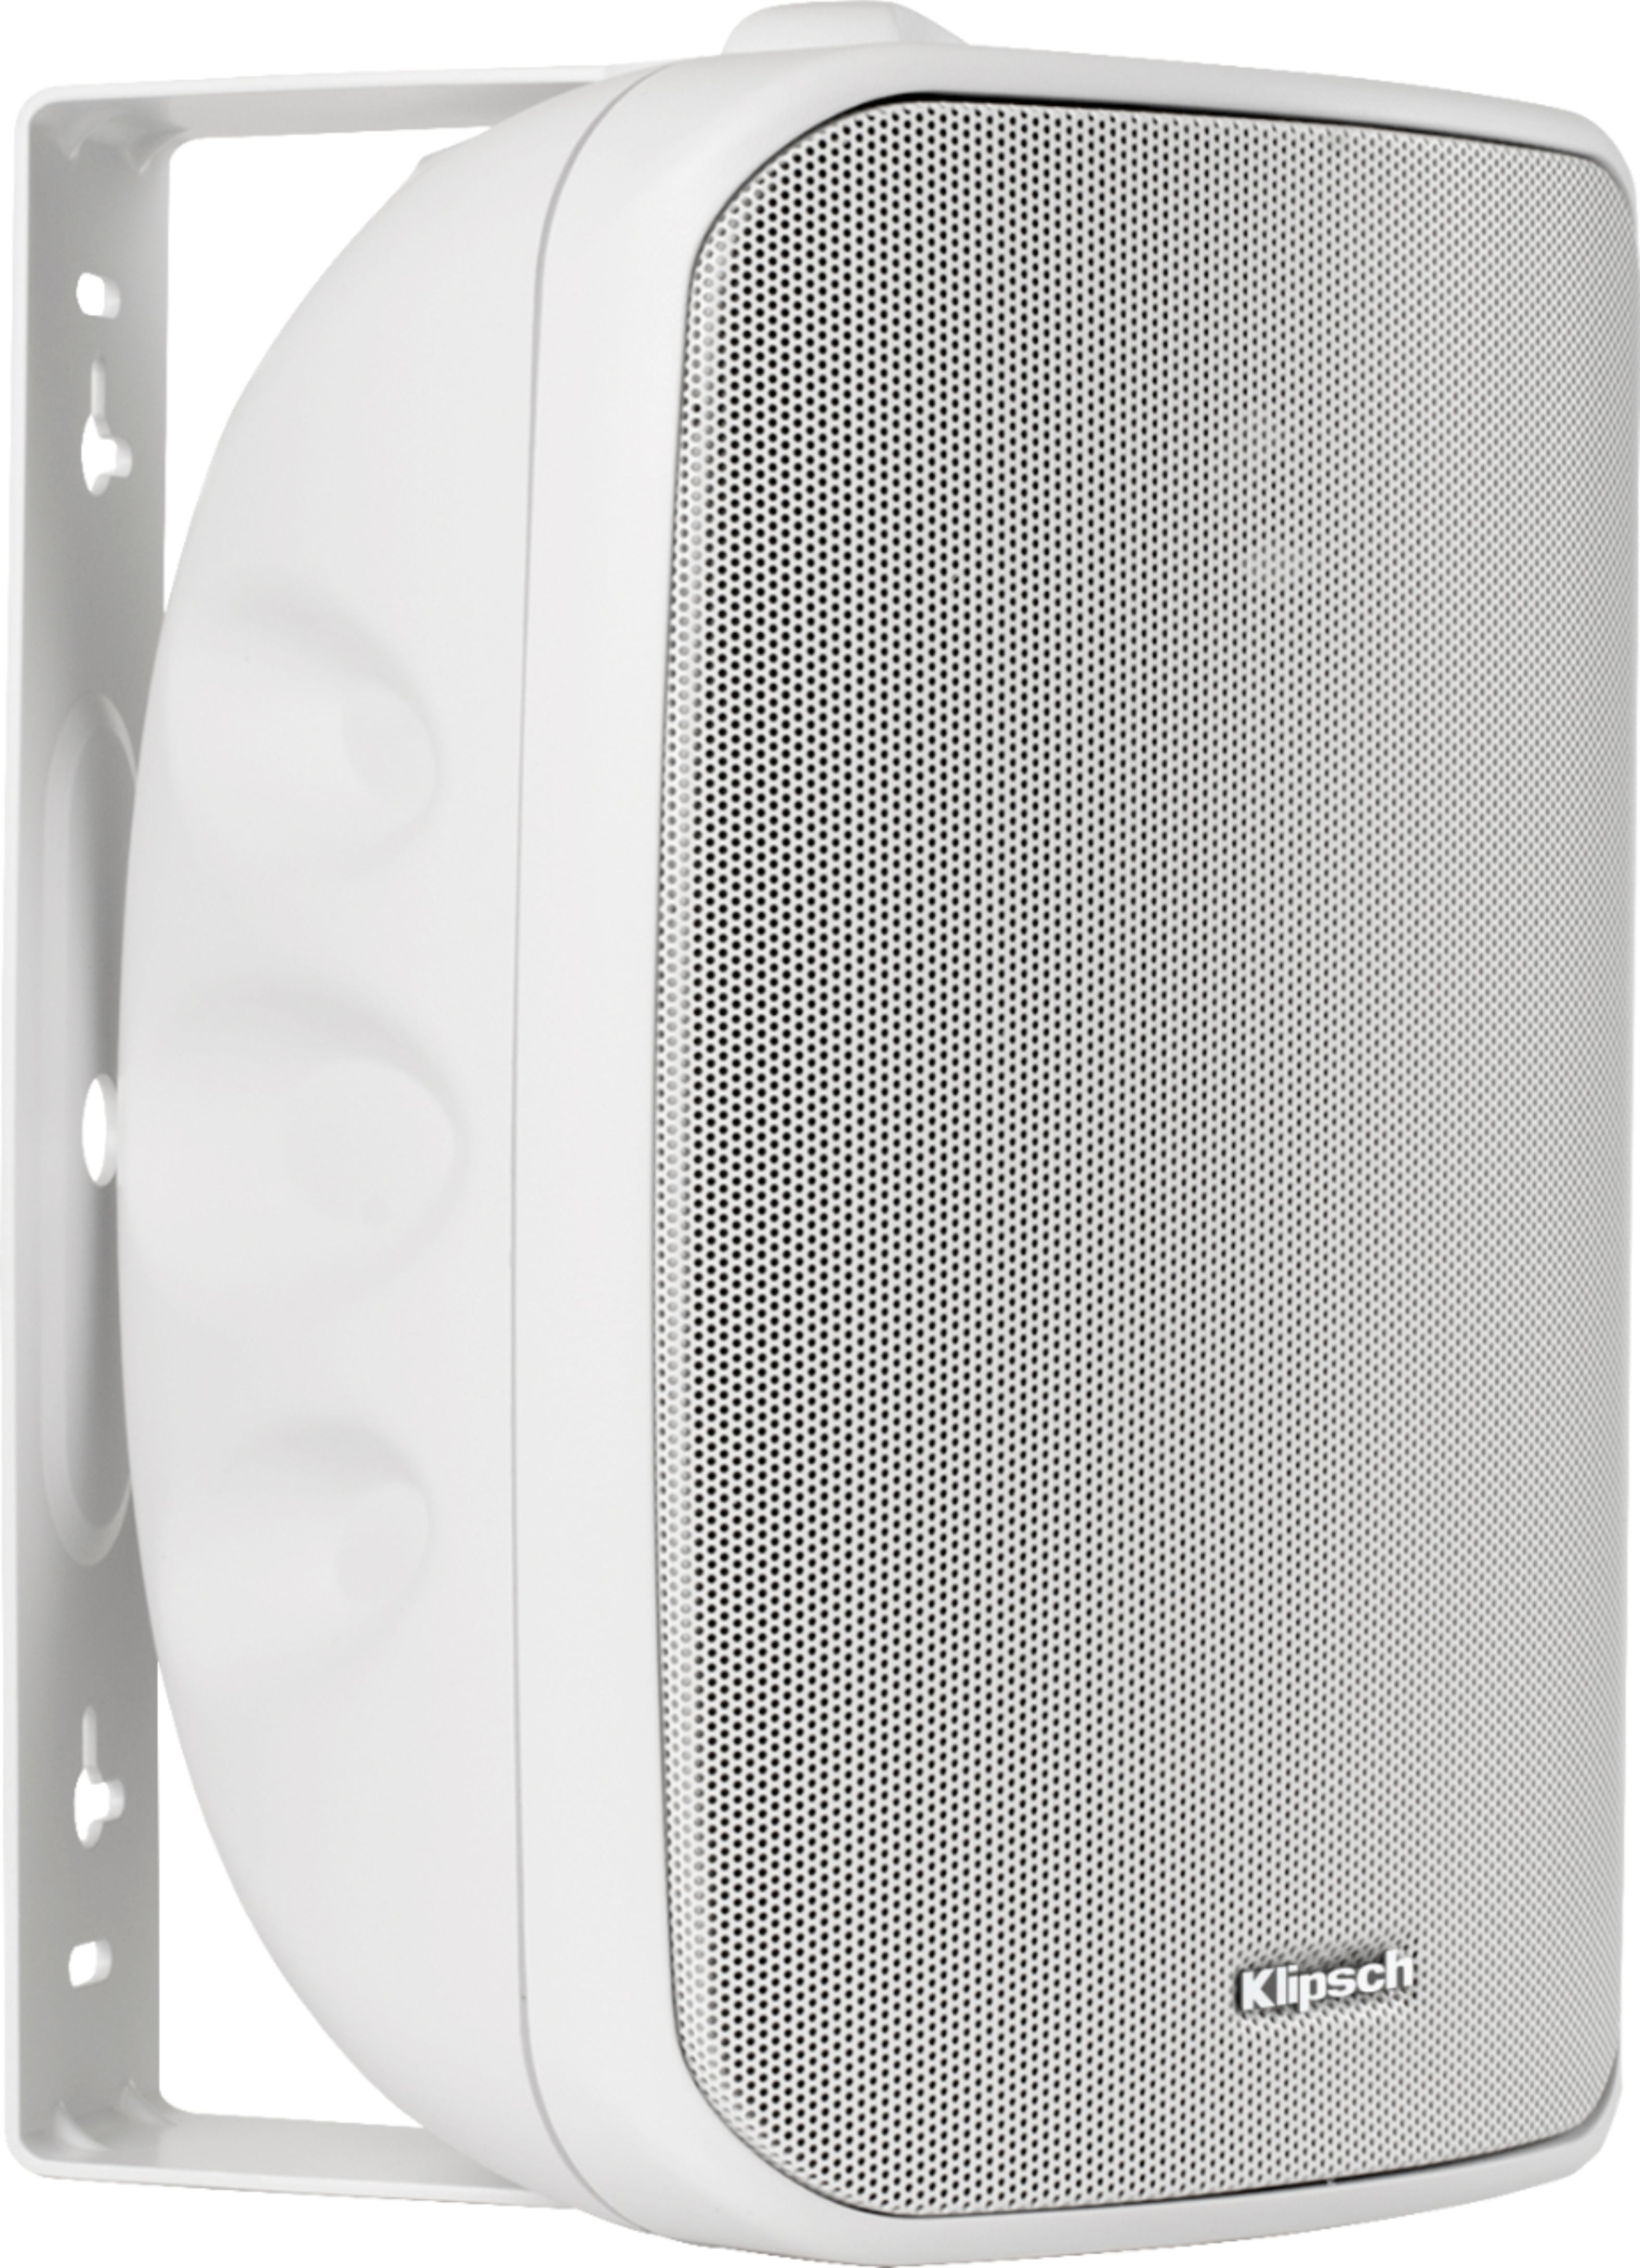 Angle View: Klipsch - KIO-650 Indoor/Outdoor All-Weather Speakers (pair) - White